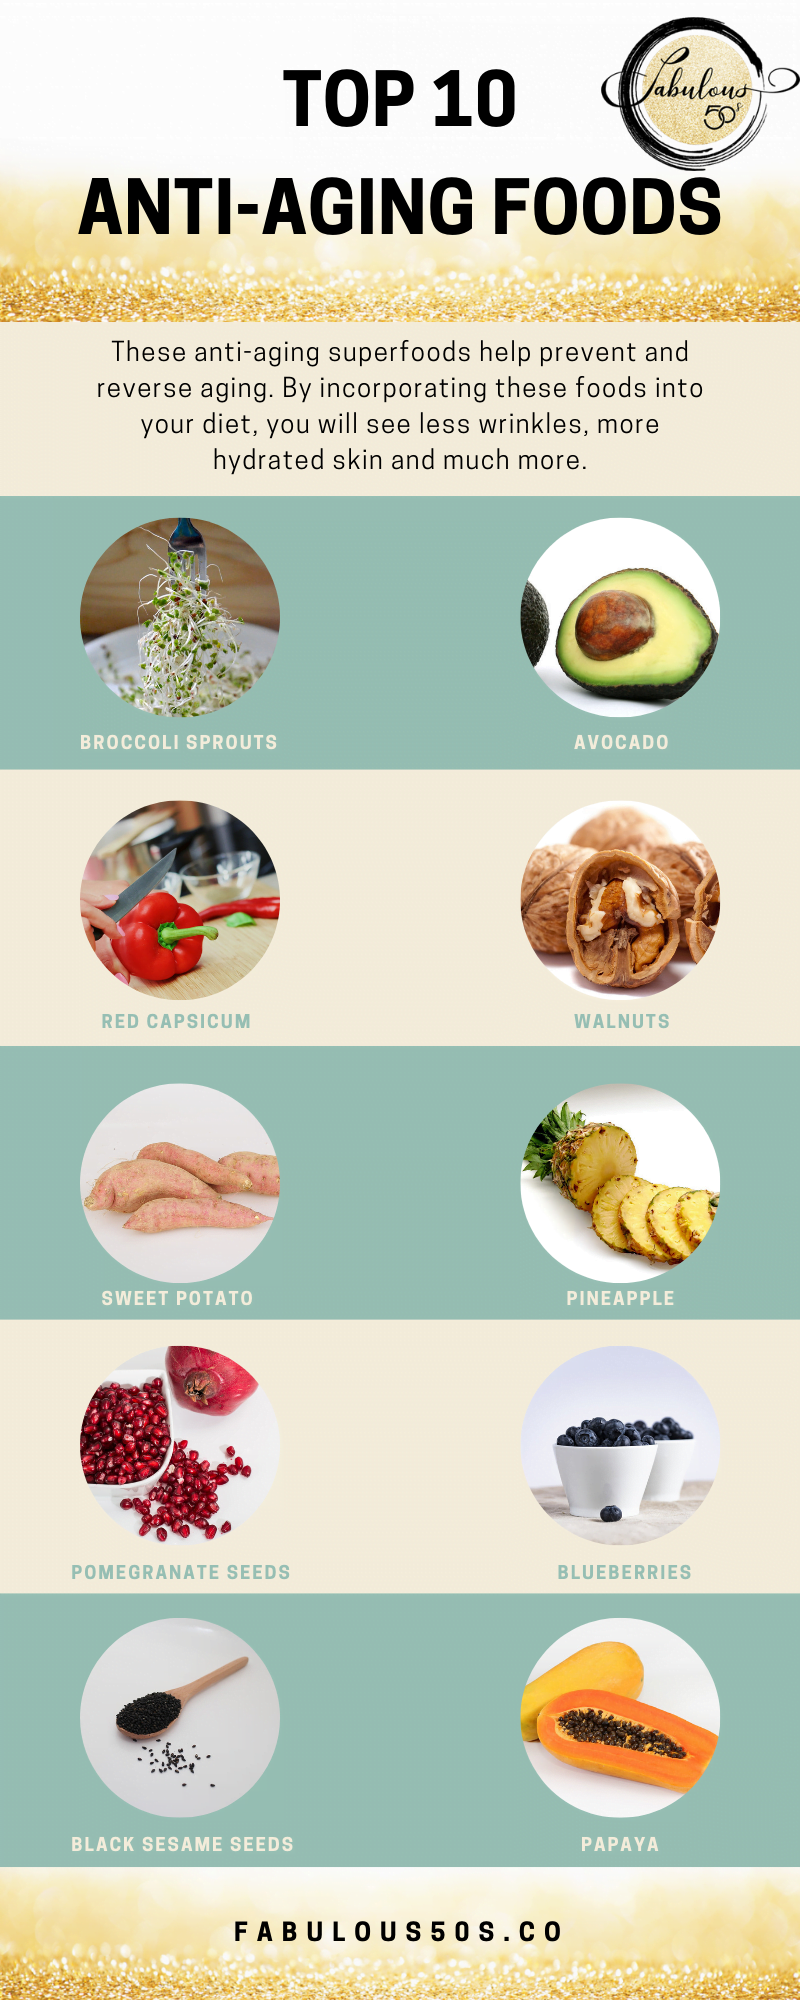 Top 10 anti aging foods